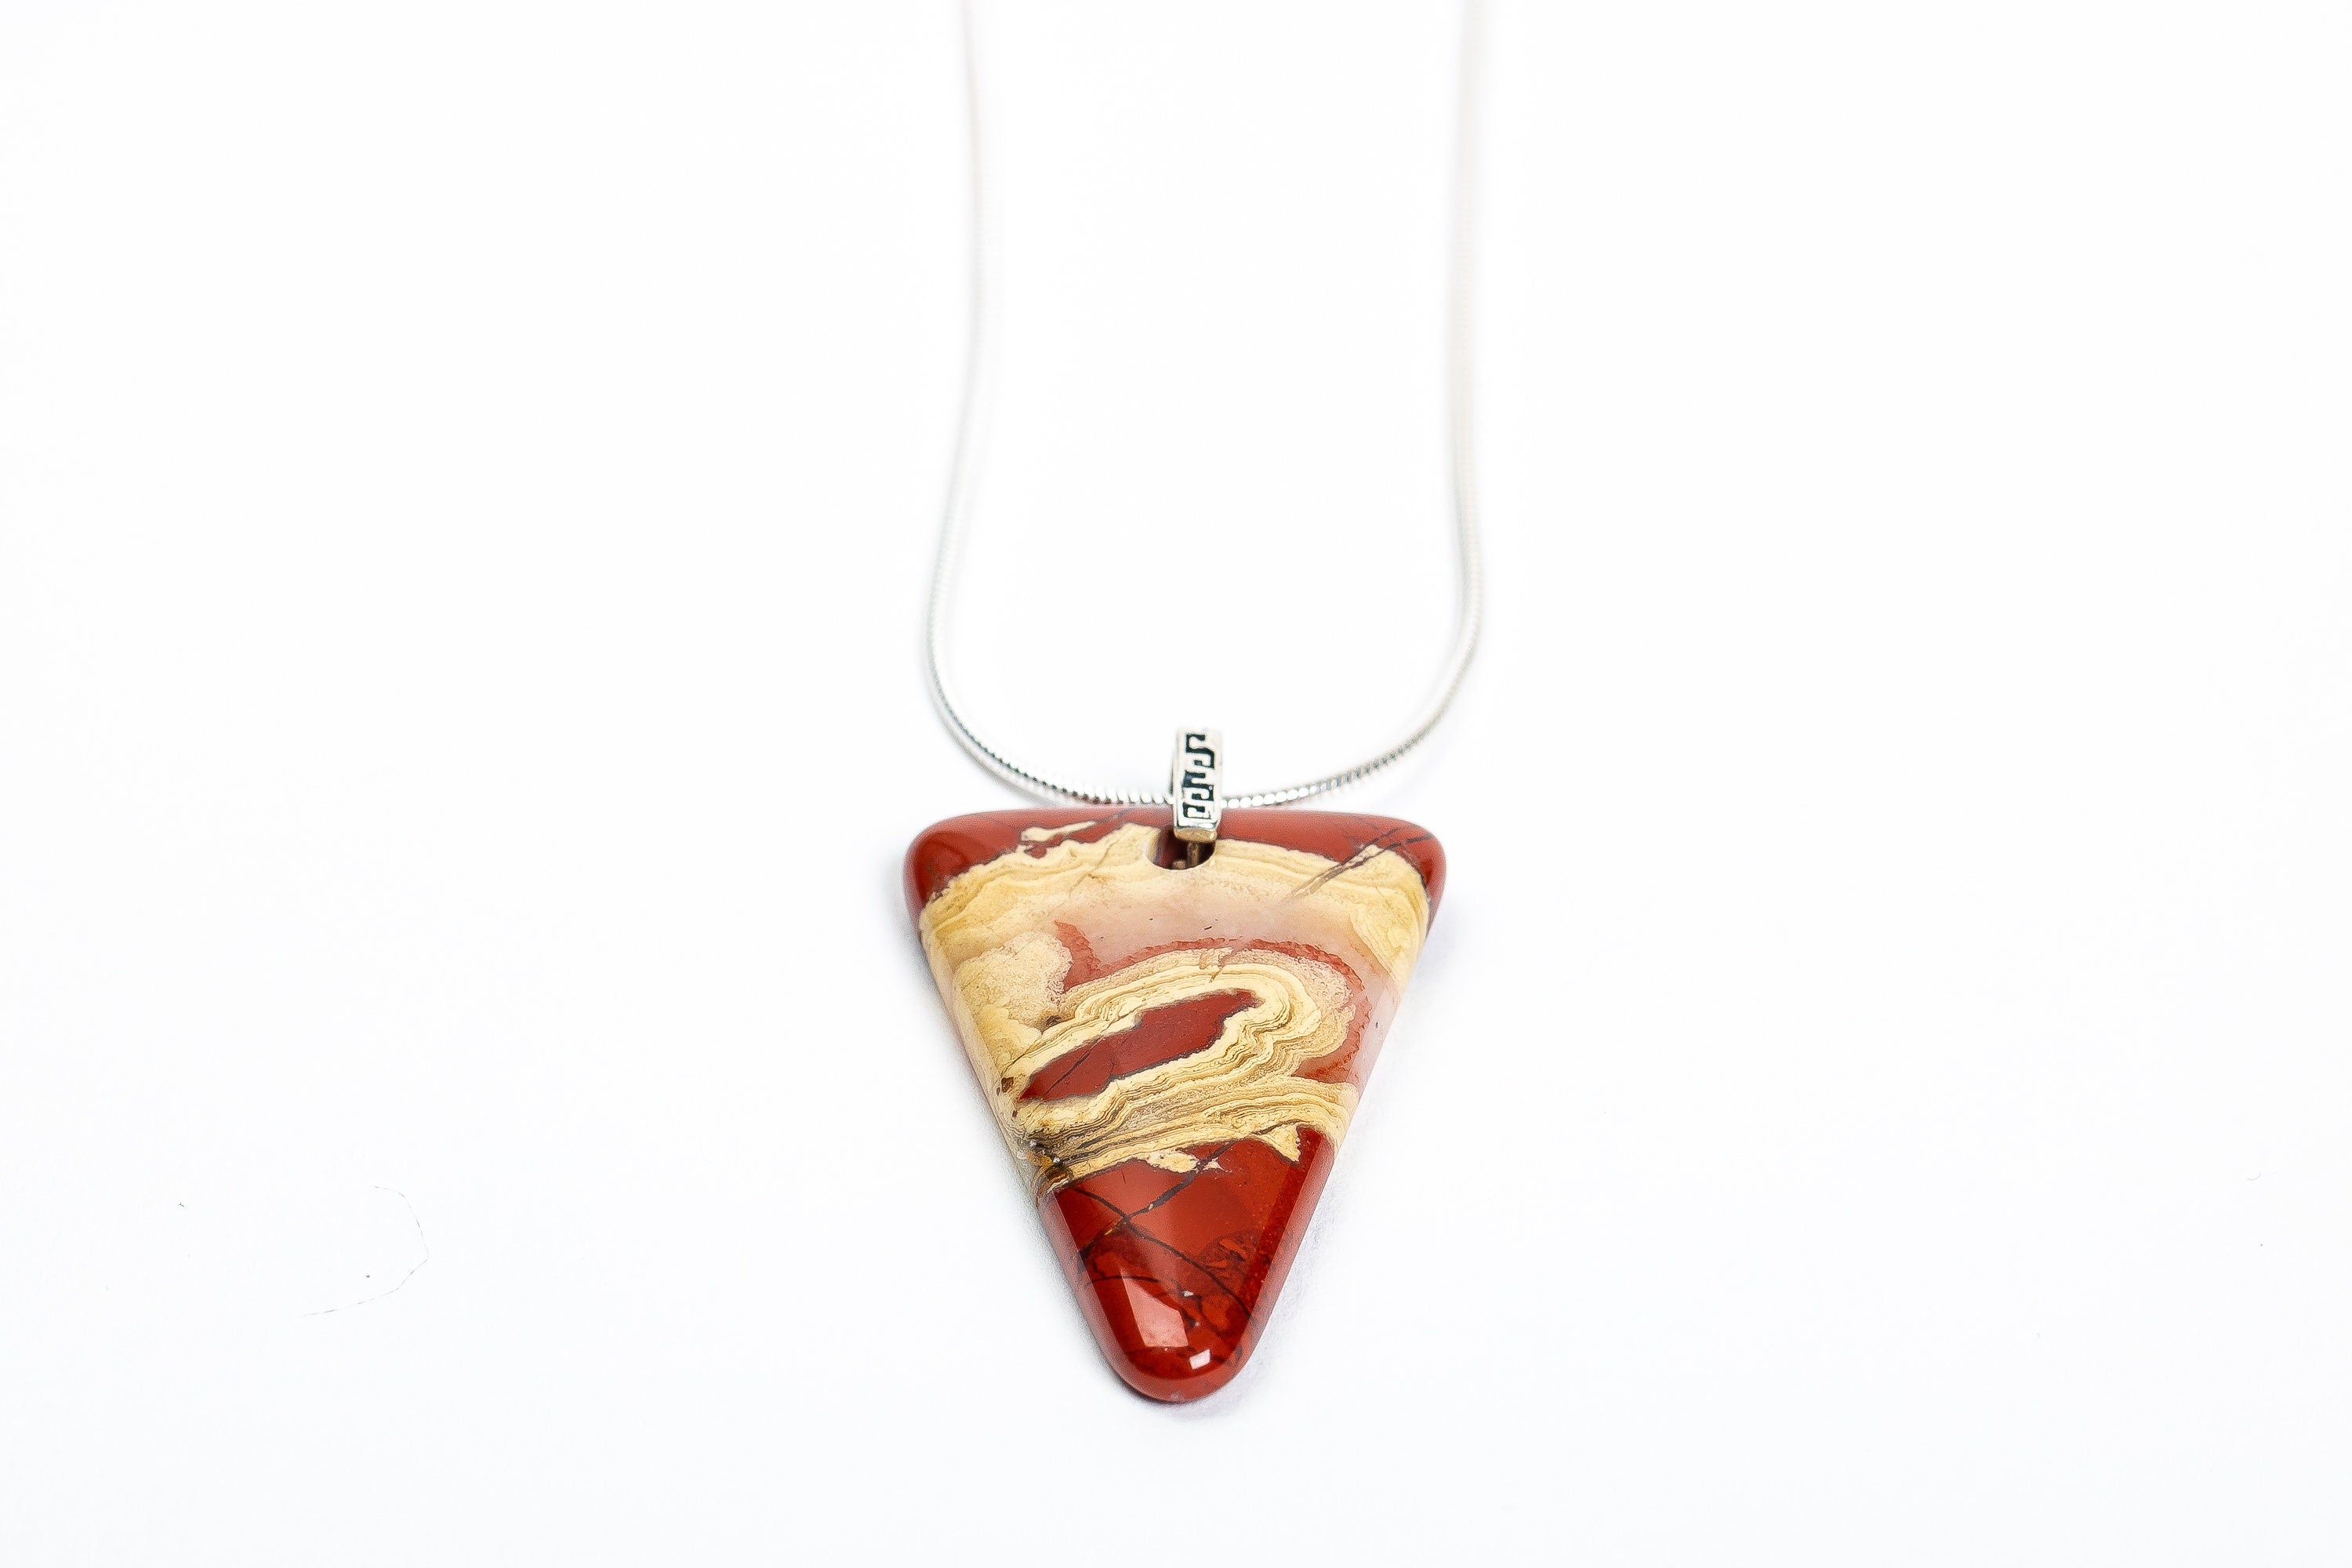 Long Red Jasper Necklace - Melanie Golden Jewelry - gemstone necklace, necklace